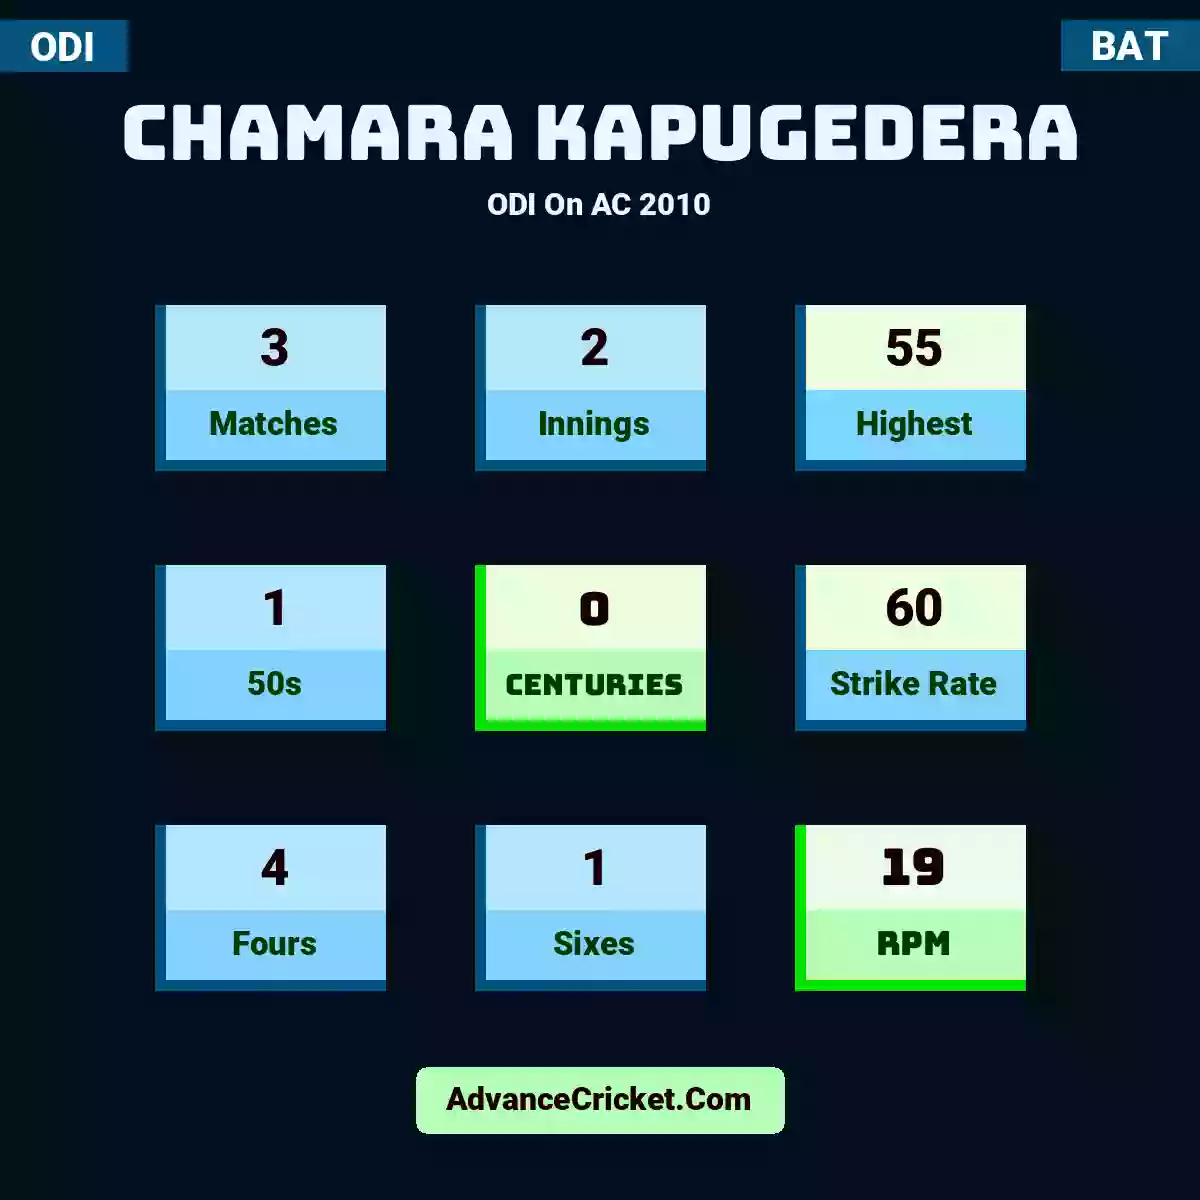 Chamara Kapugedera ODI  On AC 2010, Chamara Kapugedera played 3 matches, scored 55 runs as highest, 1 half-centuries, and 0 centuries, with a strike rate of 60. C.Kapugedera hit 4 fours and 1 sixes, with an RPM of 19.